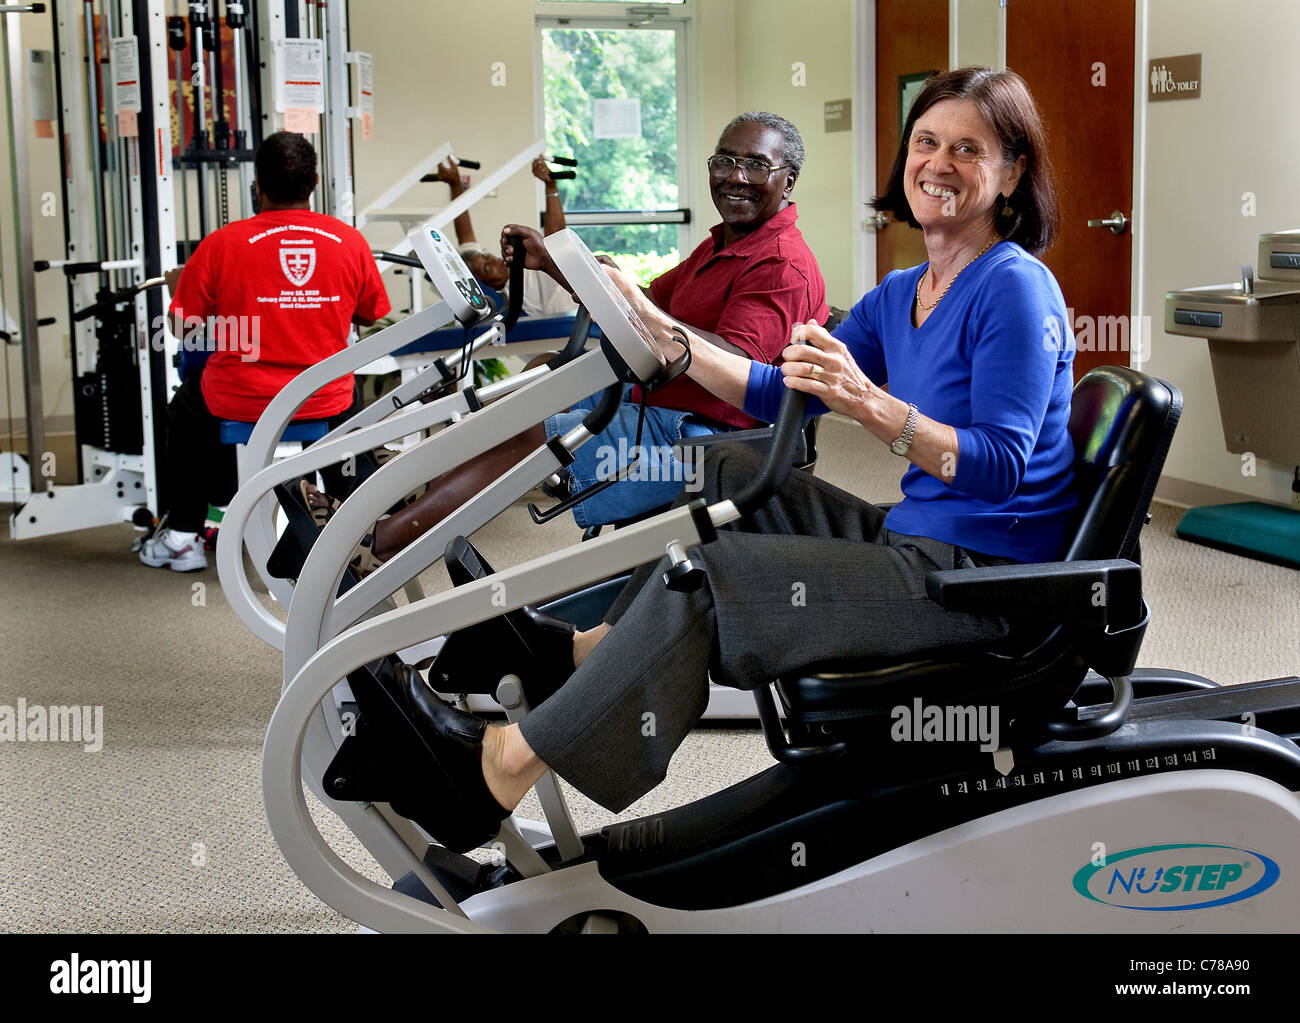 Senior citizens exercise at a gym in a Senior Center Stock Photo - Alamy